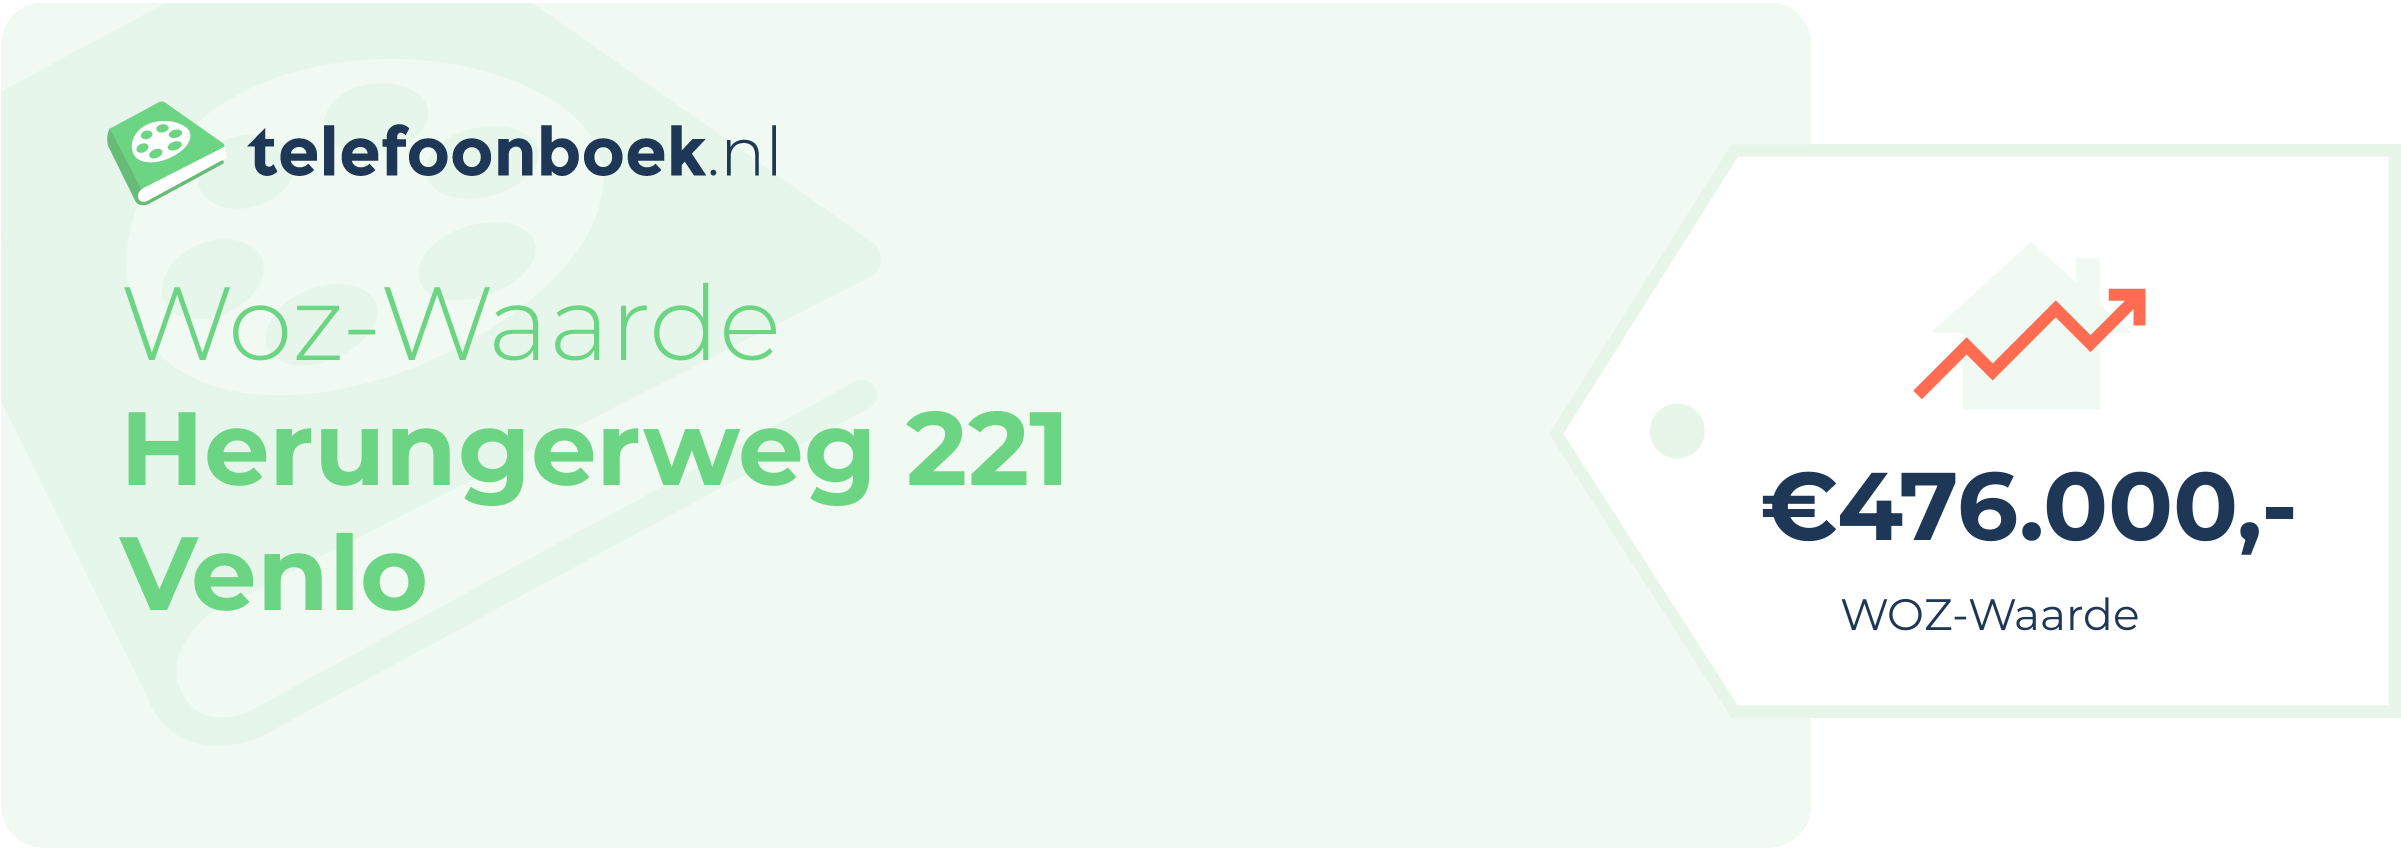 WOZ-waarde Herungerweg 221 Venlo